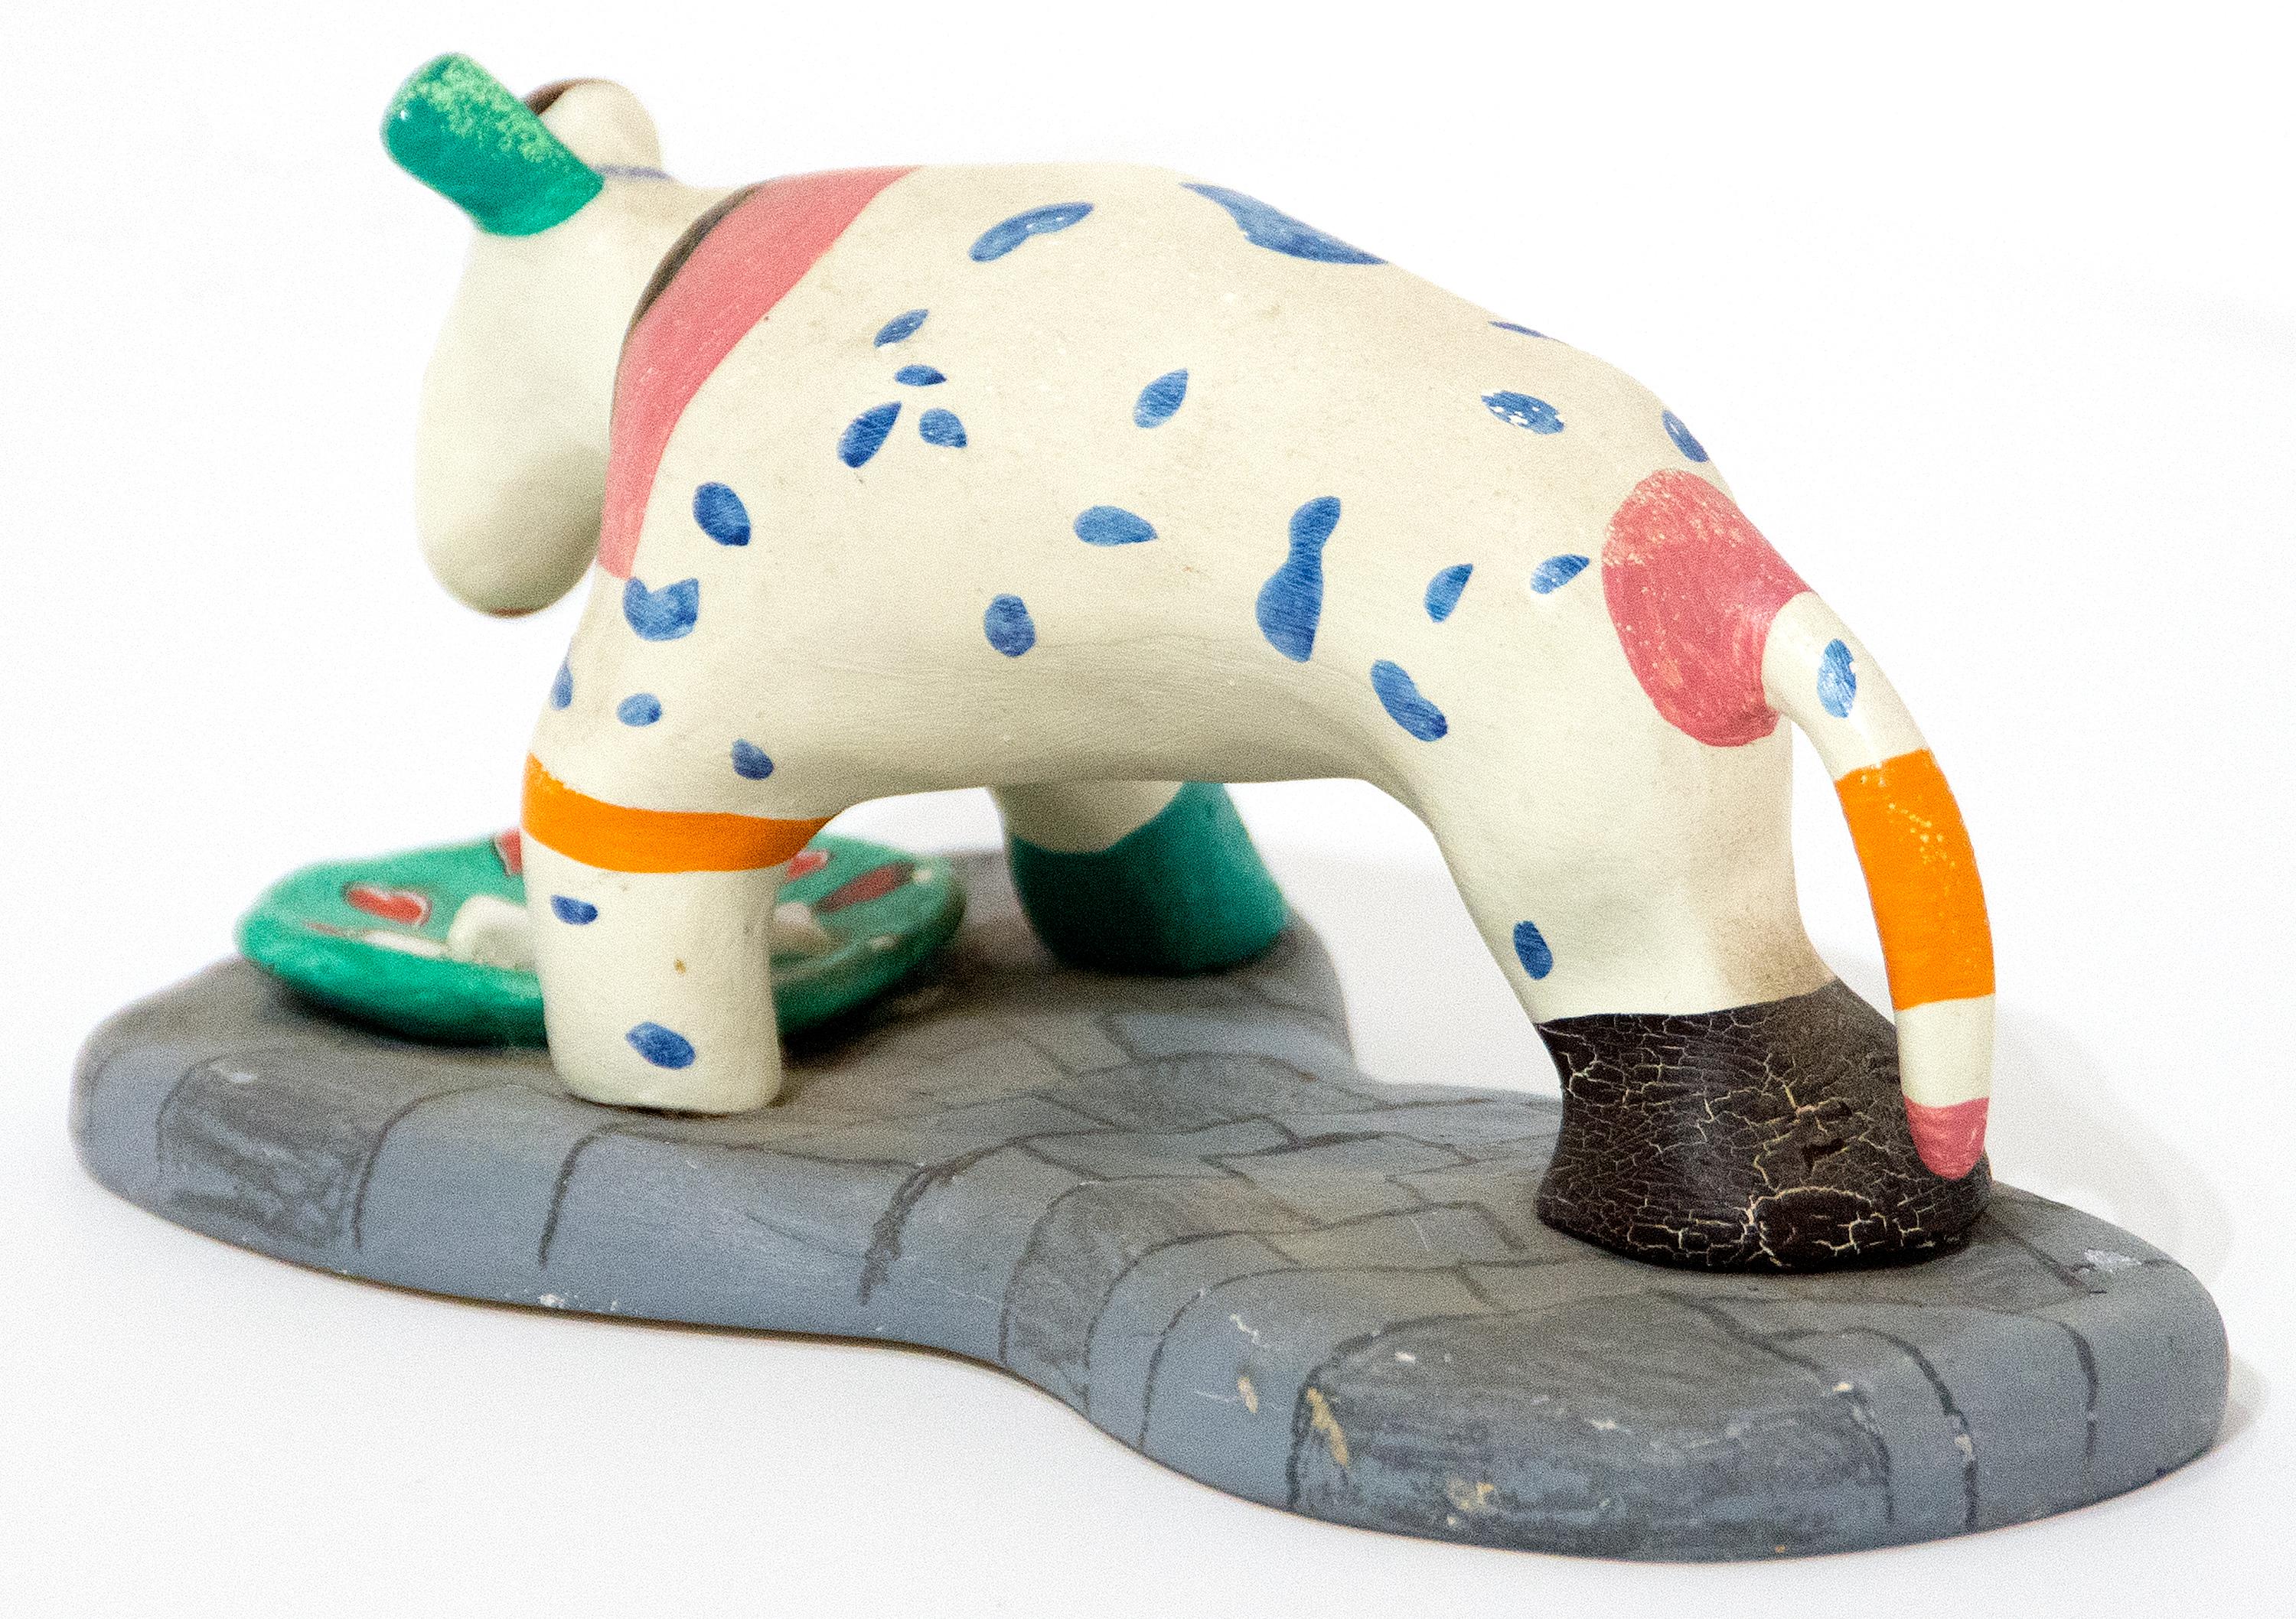 Crying Dog - Sculpture by Niki de Saint Phalle